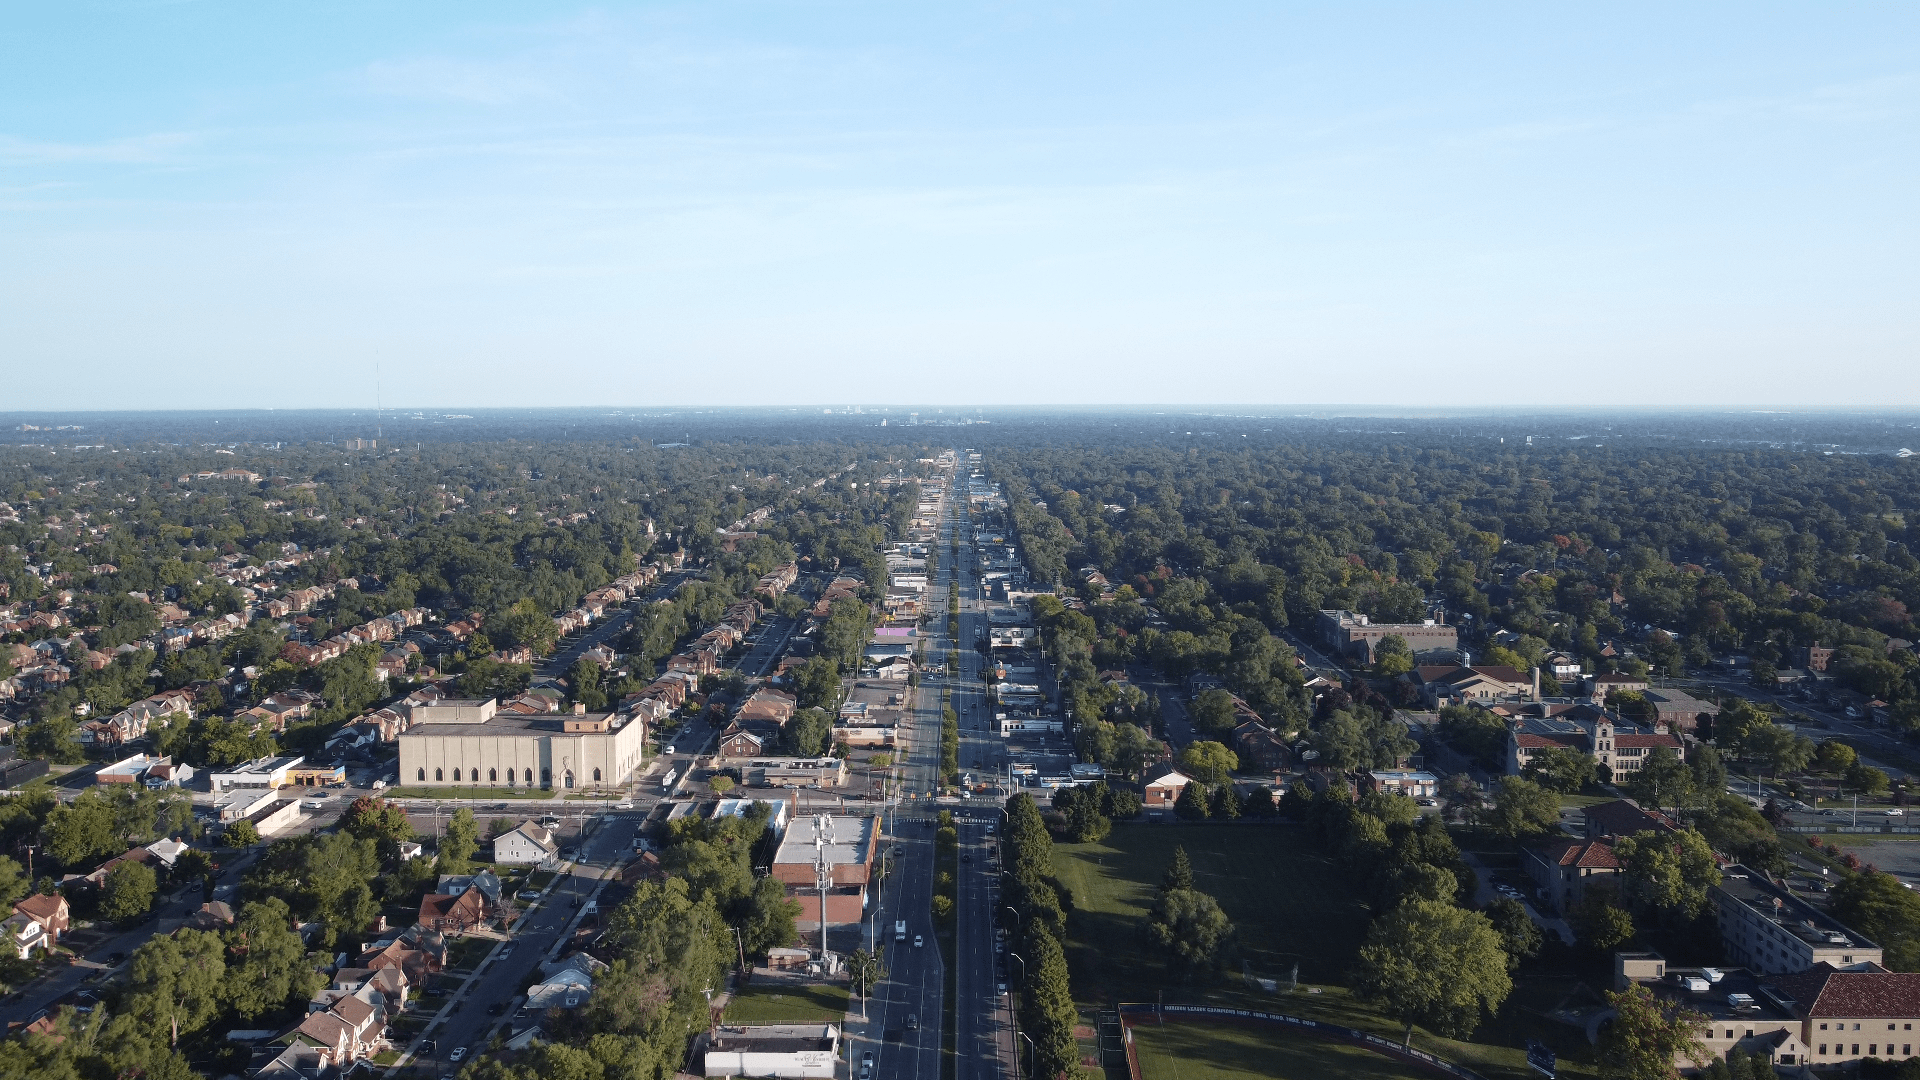 Aerial view of a main street through a community.